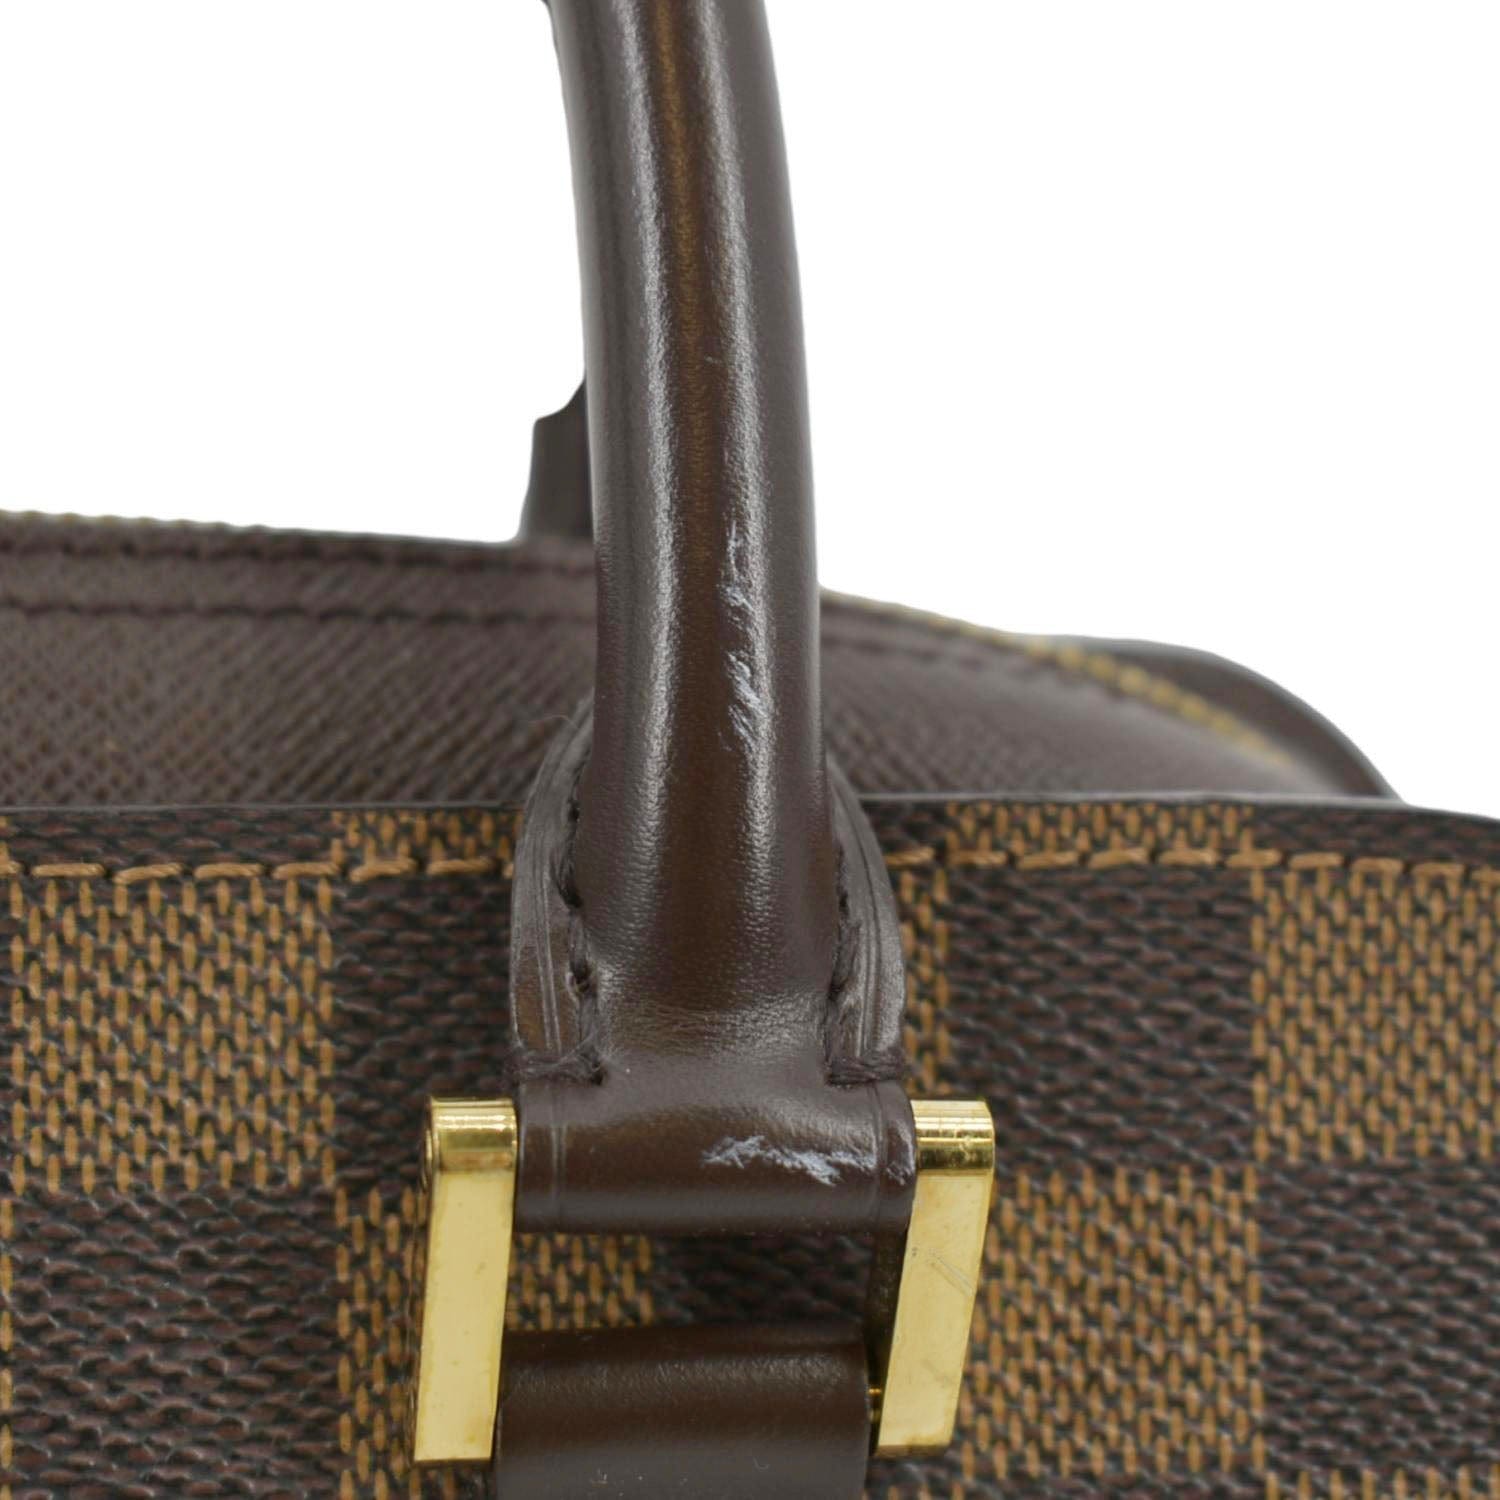 Louis Vuitton Damier Triana Handbag (authentic)